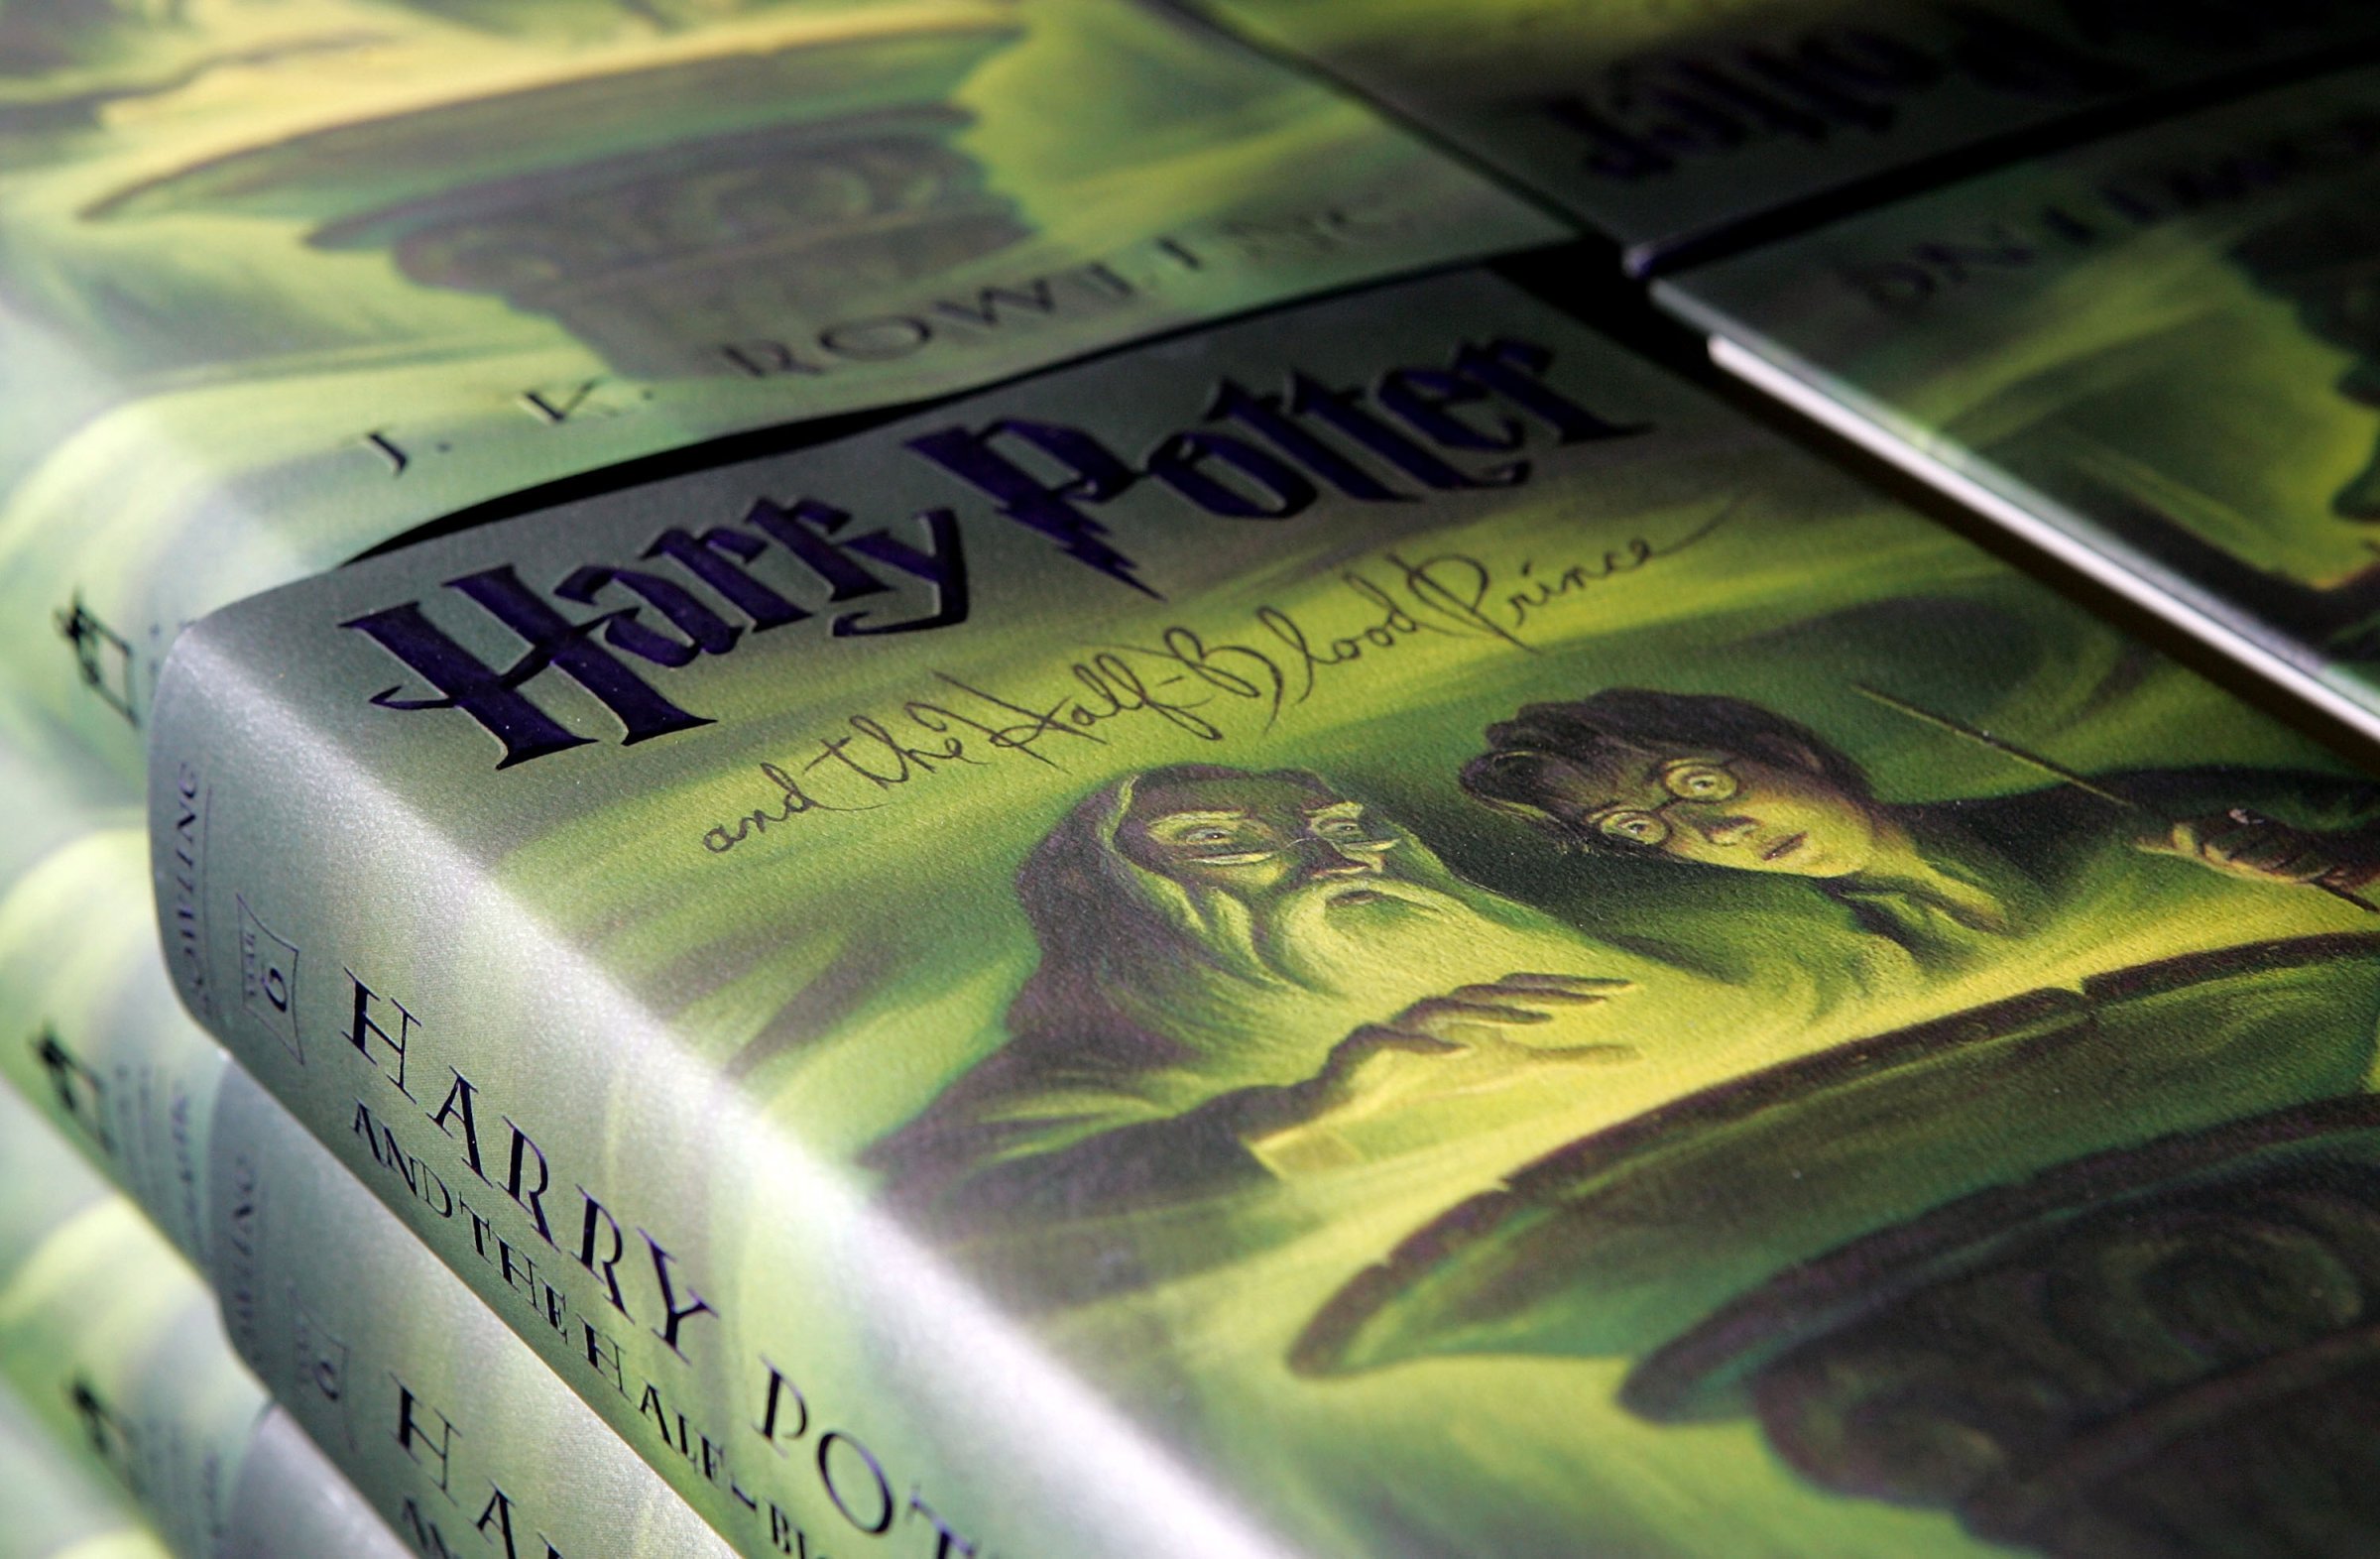 Amazon.com Prepares To Ship Latest Harry Potter Book